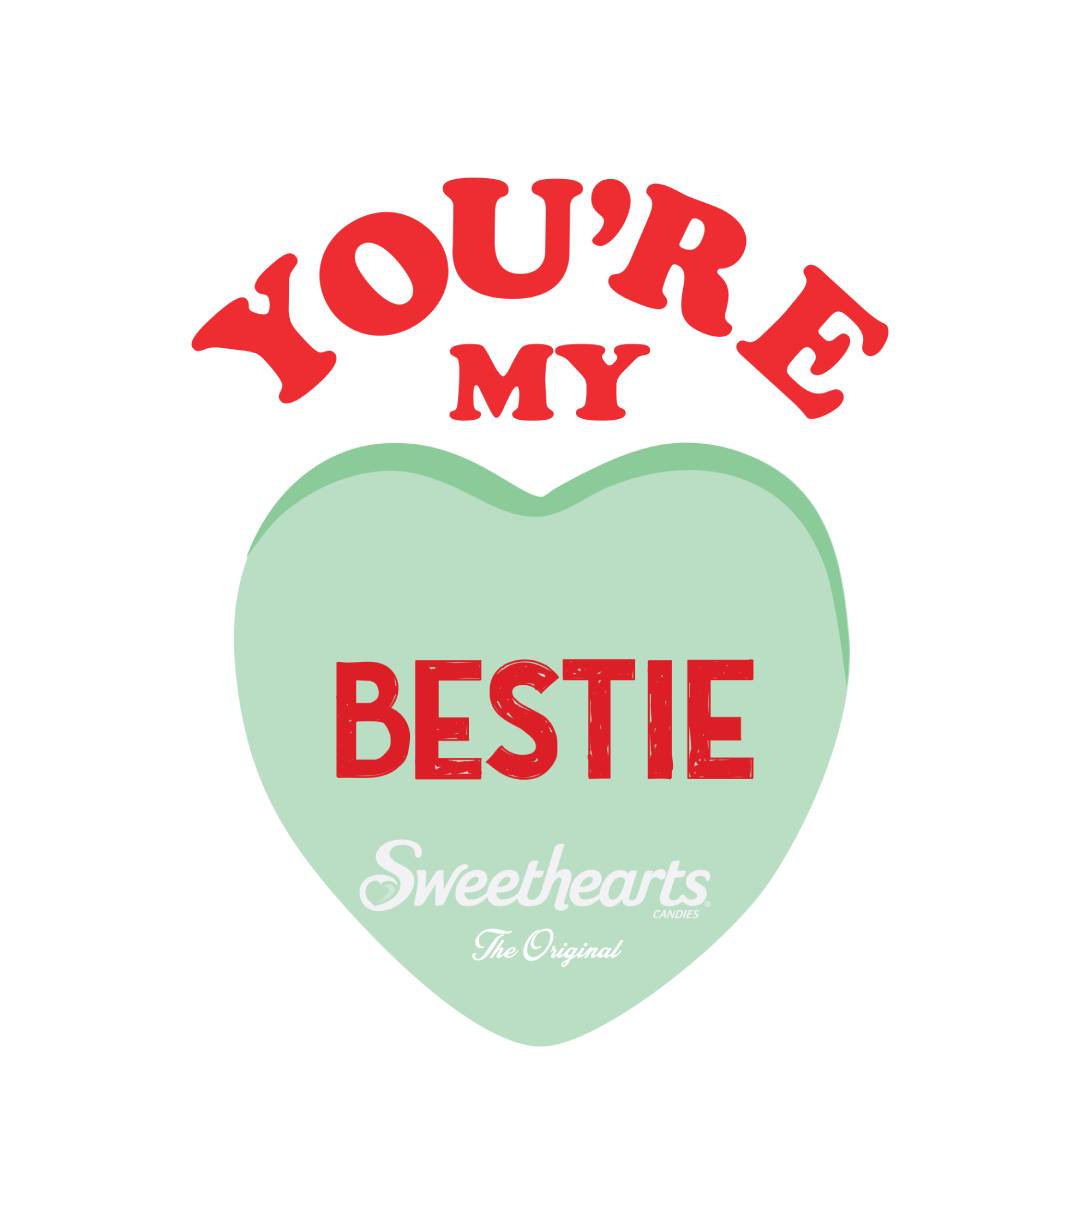 You're My Bestie Sweethearts Shirt